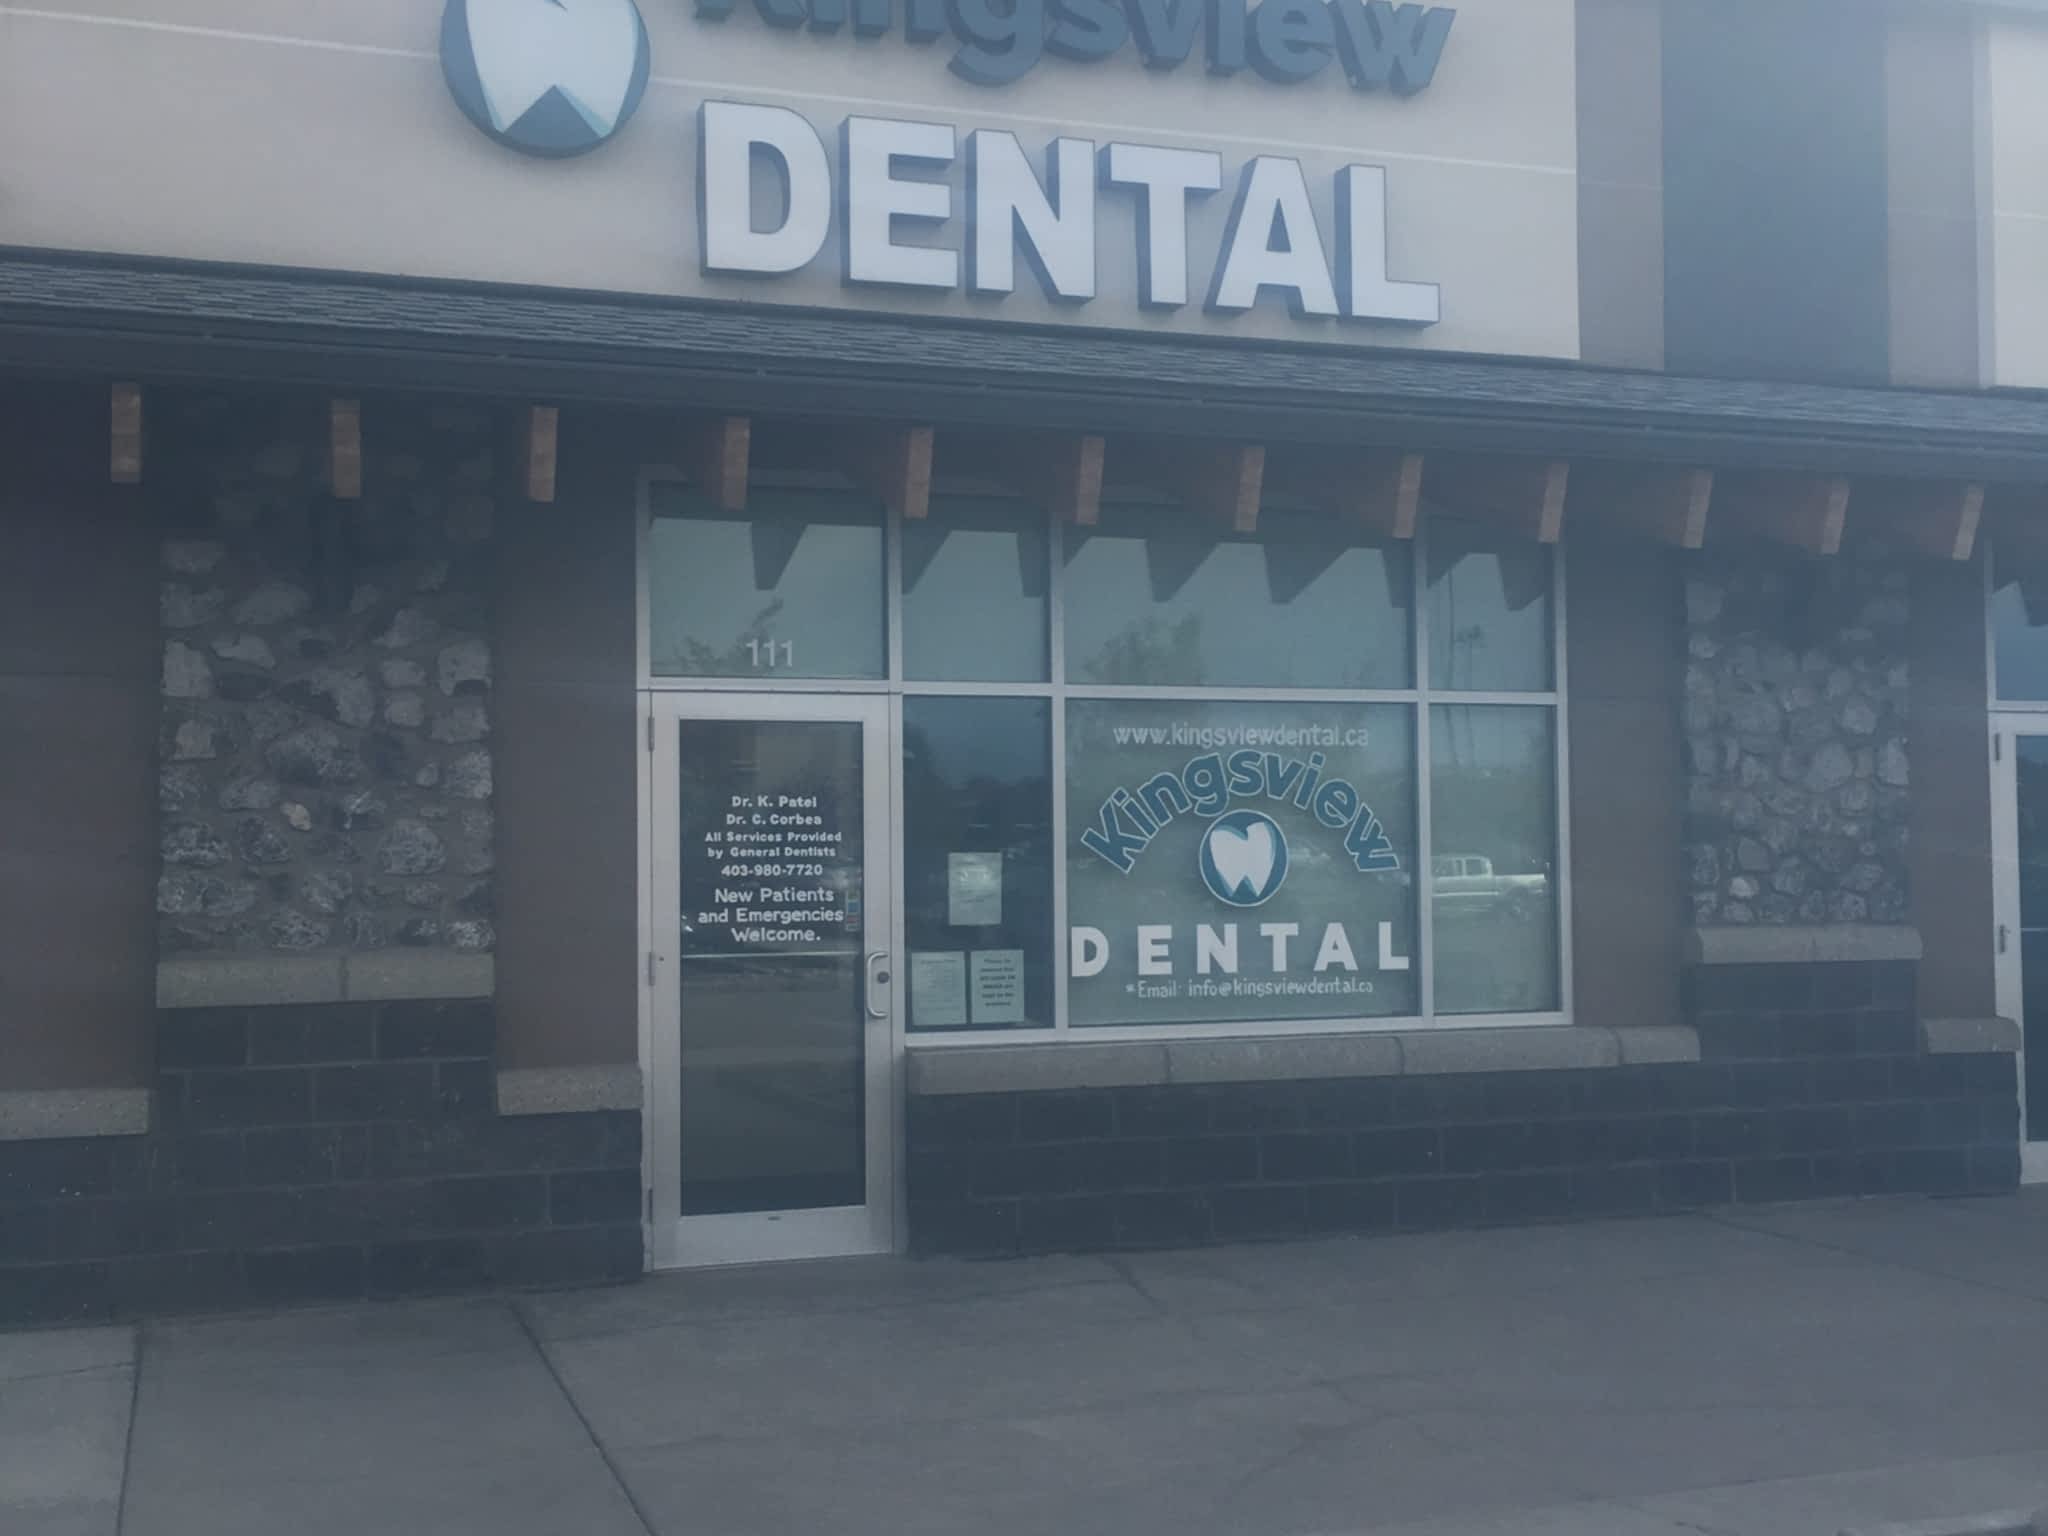 photo Kingsview Dental